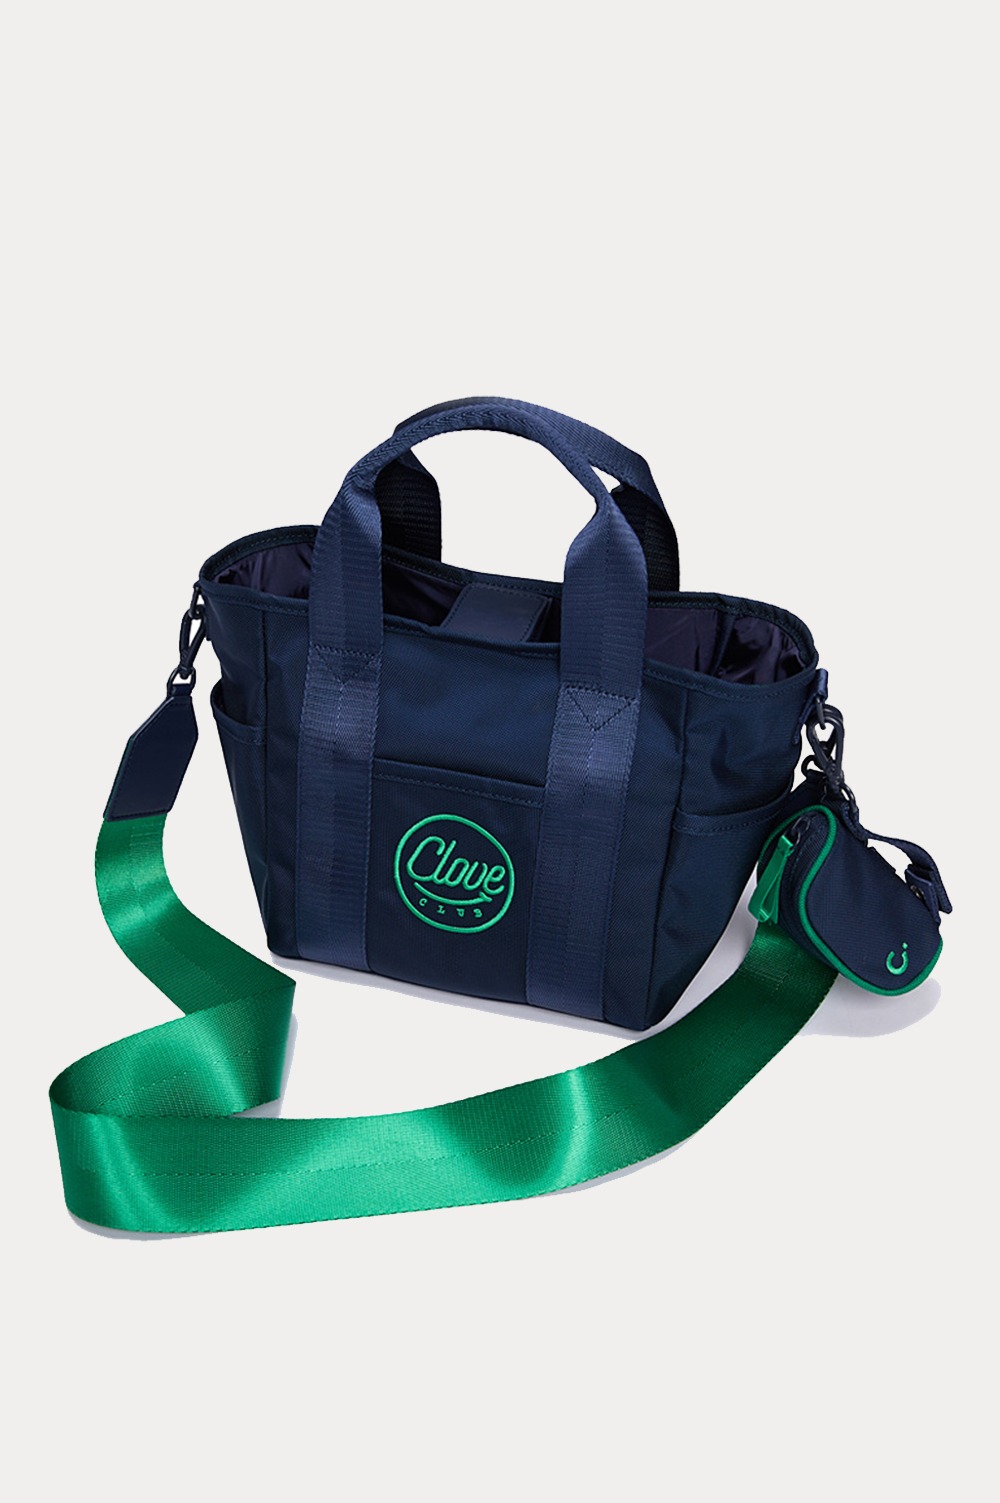 clove - Shoulder Bag with Golf Ball Case (Navy)